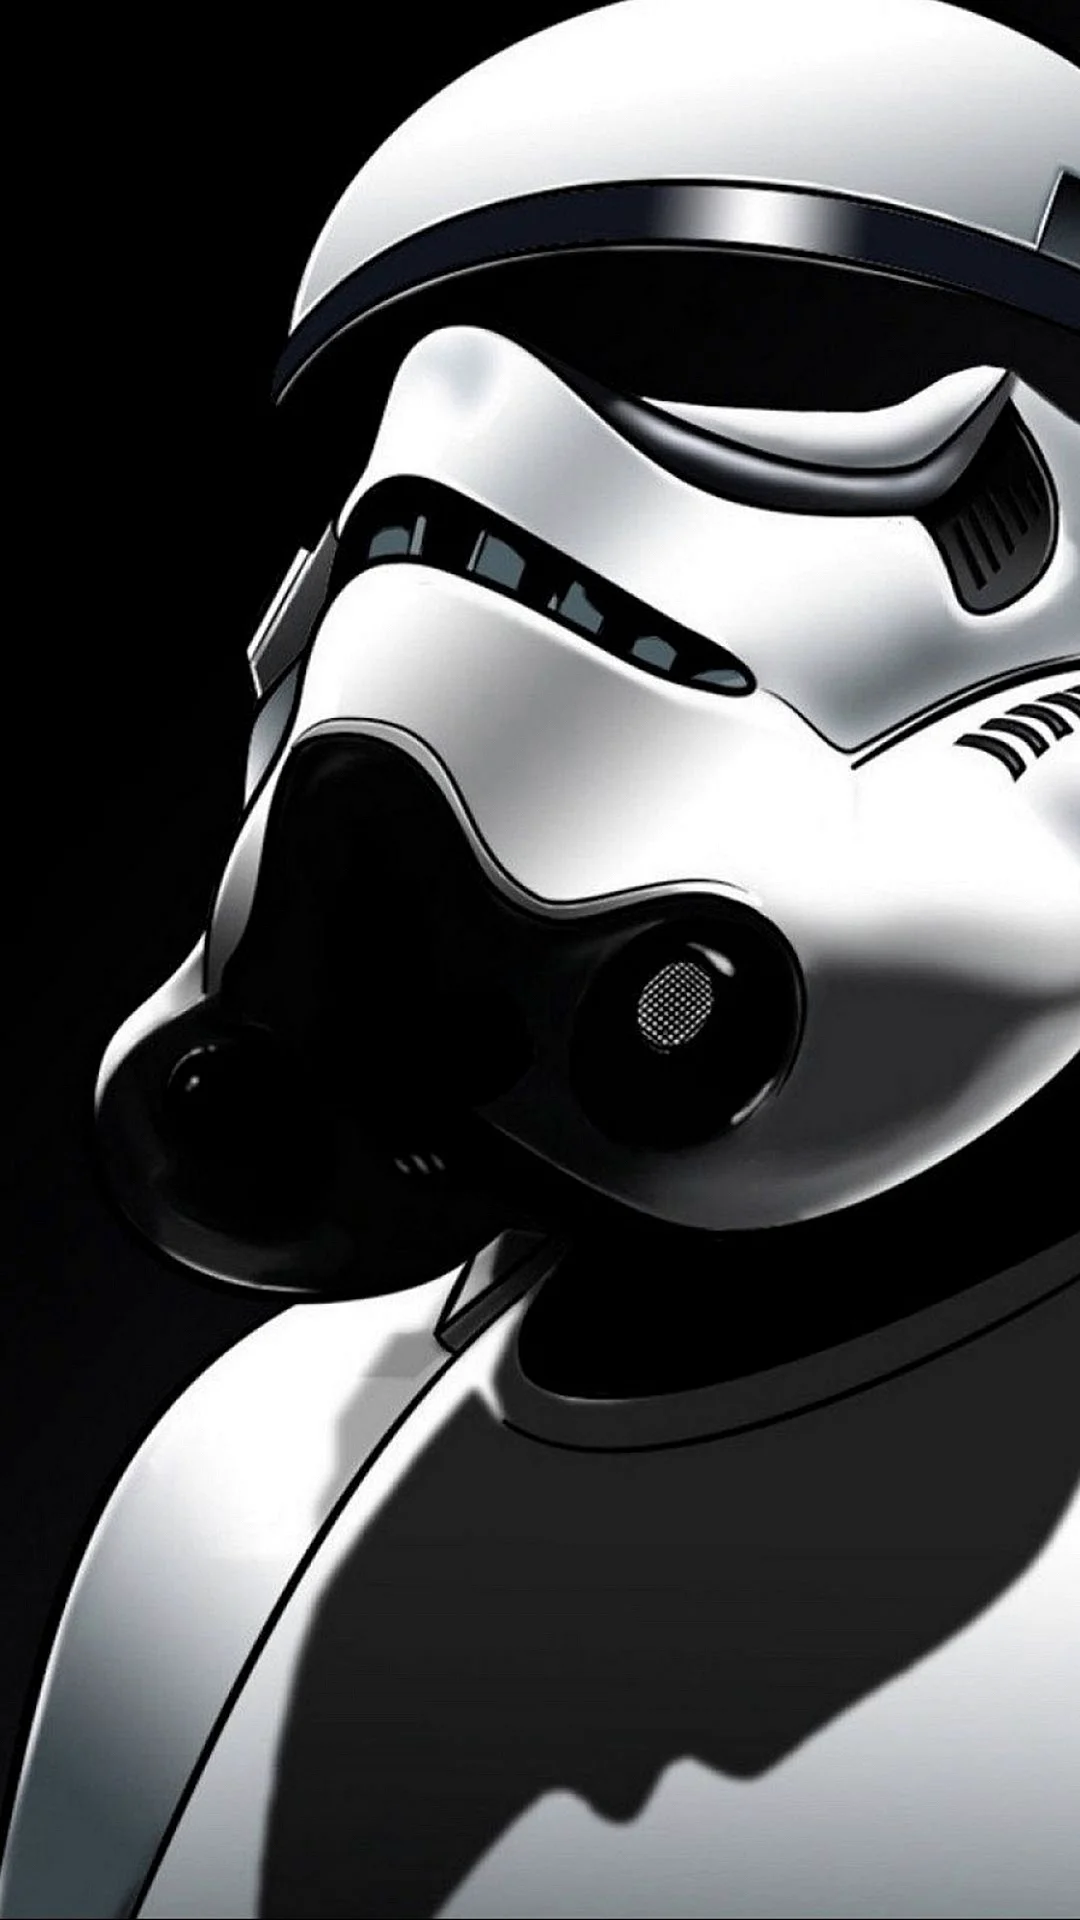 Star Wars Darth Vader & Stormtrooper Wallpaper For iPhone